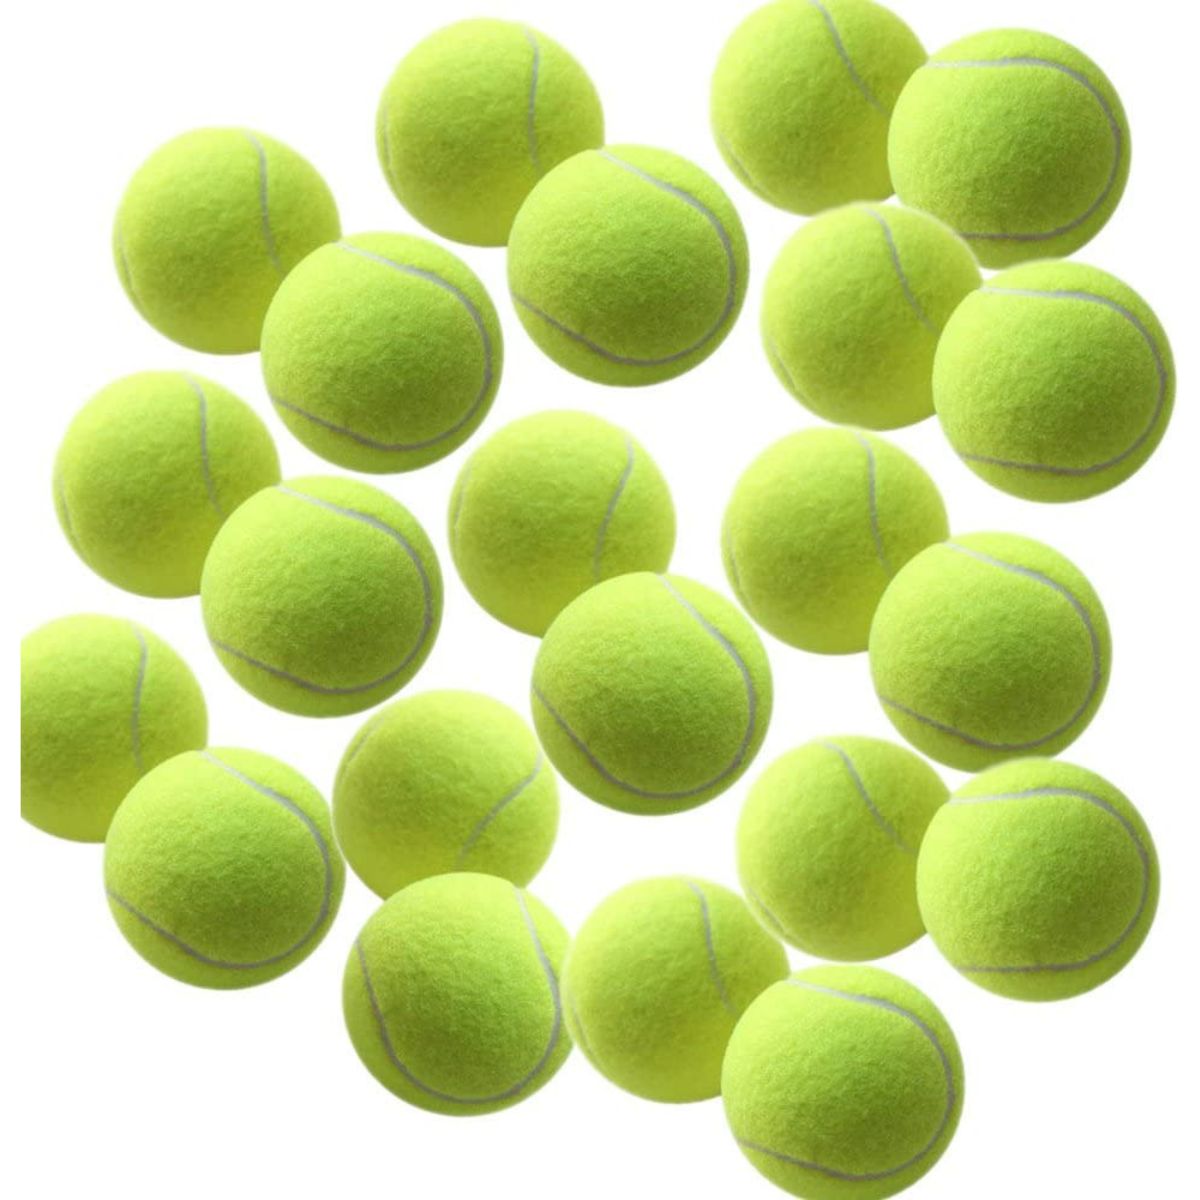 The Best Tennis Balls for Practice Options: Swity Home Tennis Balls